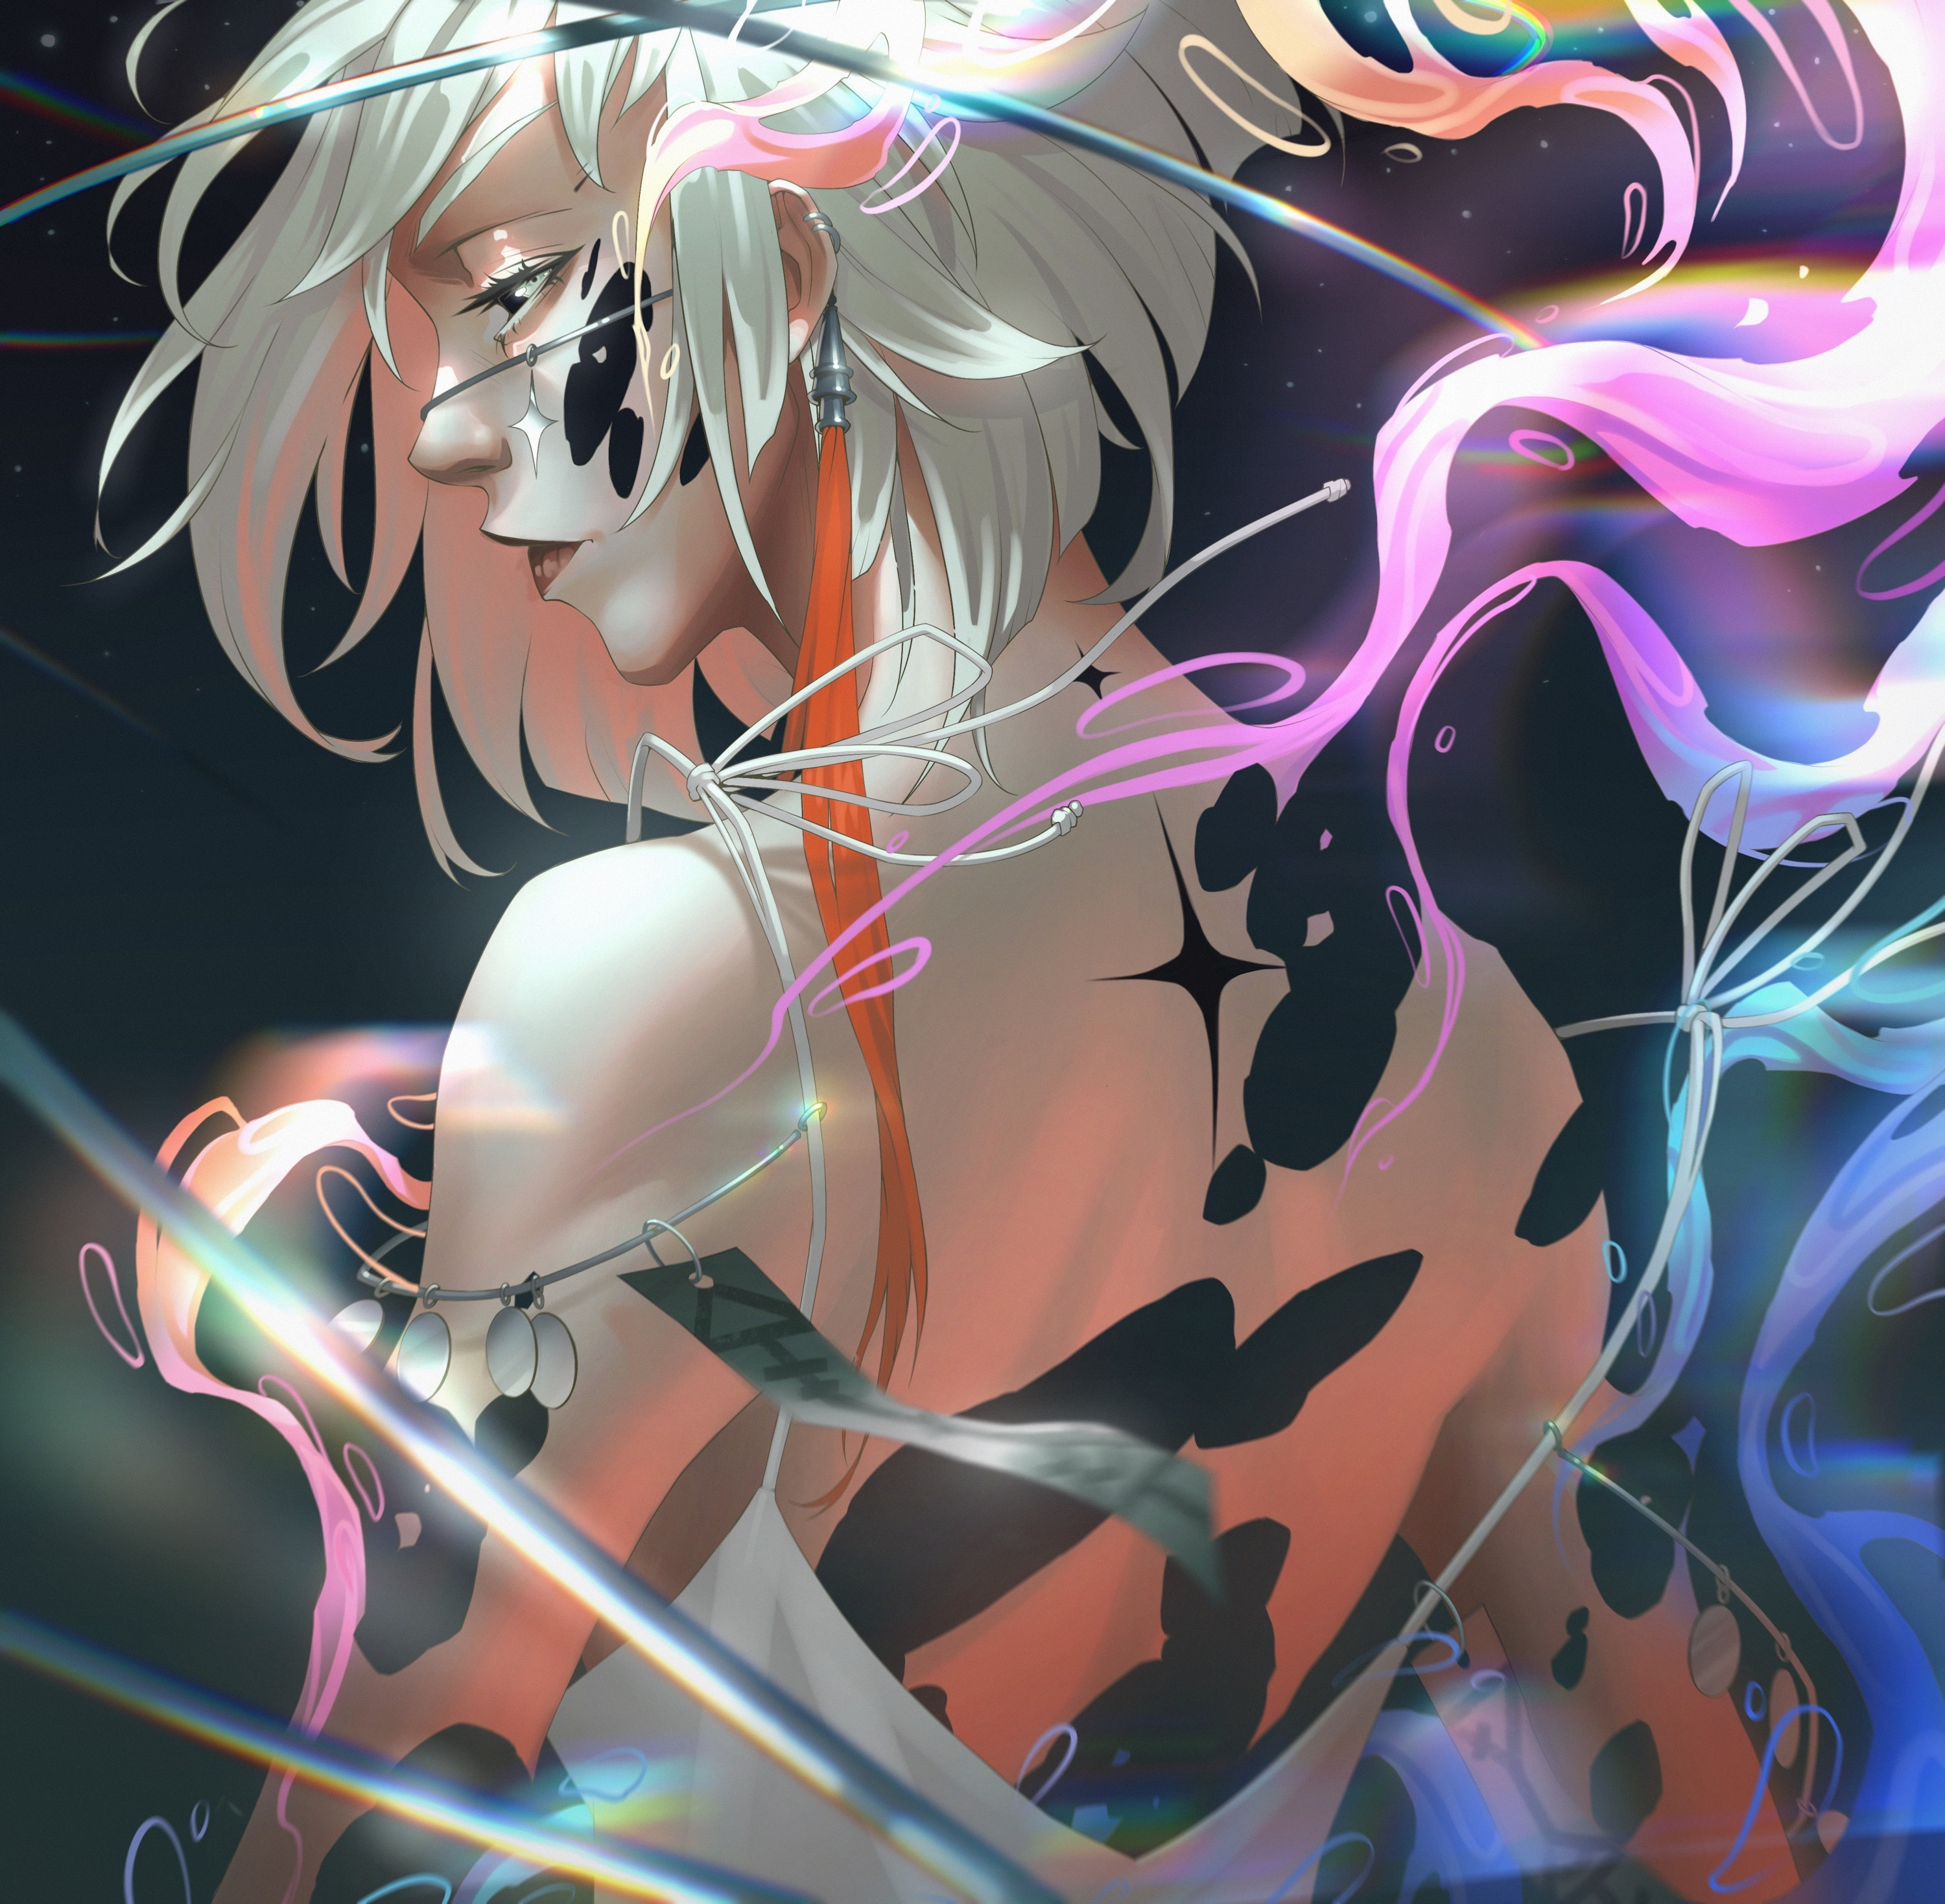 General 3000x2937 digital art artwork illustration women blonde short hair abstract fantasy art fantasy girl back